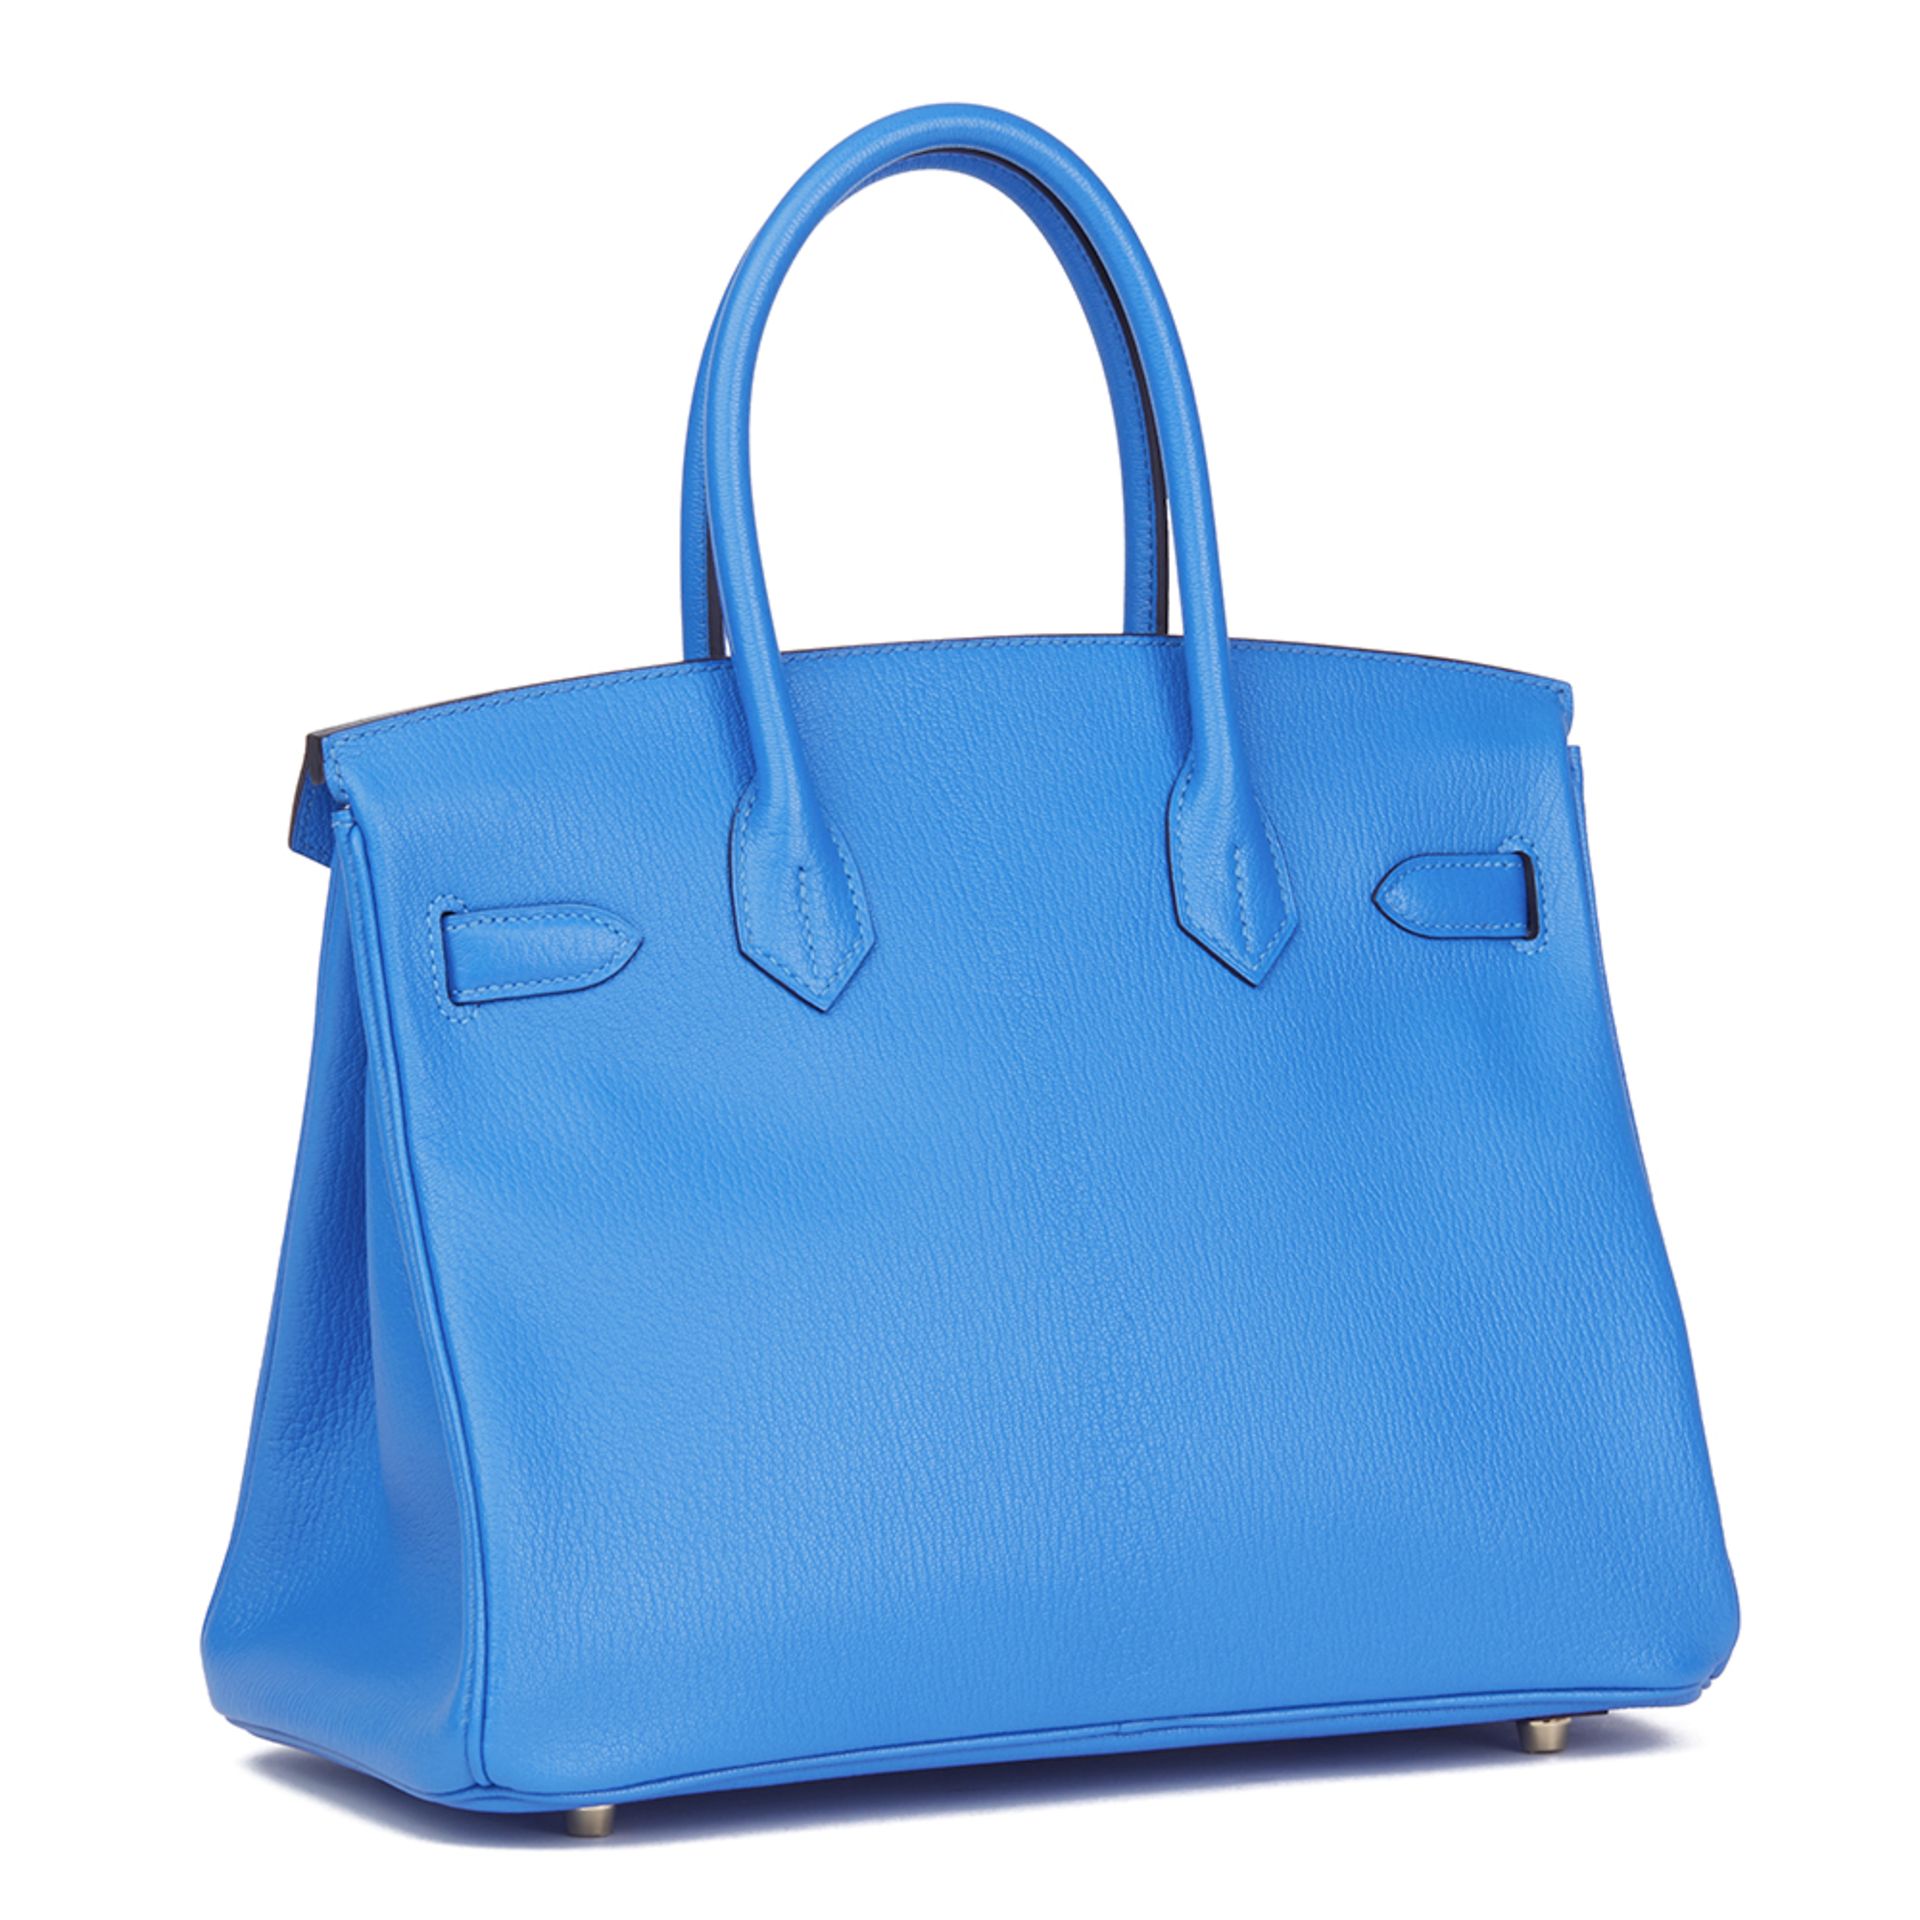 Hermès Blue Hydra & Gris Mouette Chevre Mysore Leather Special Order Birkin 30cm - Image 4 of 10